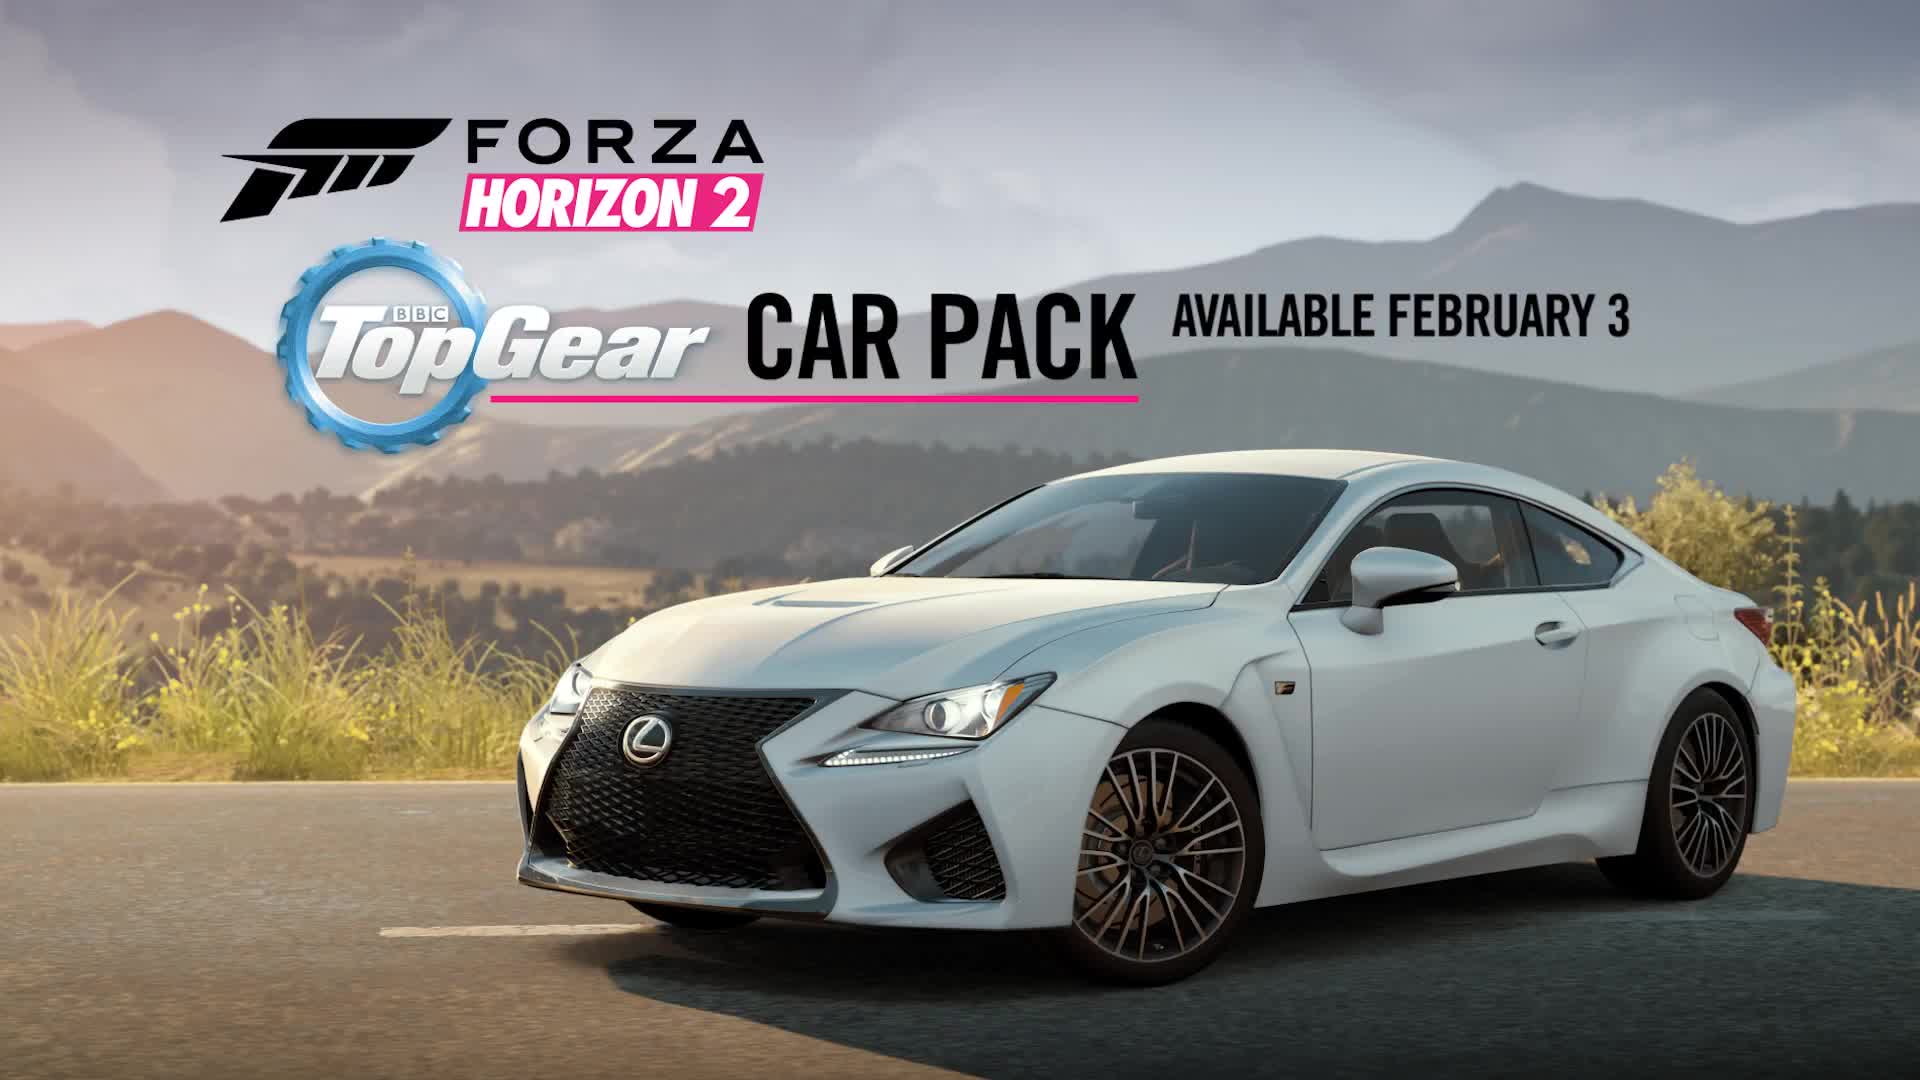 Forza Horizon 2 - Top Gear Car Pack